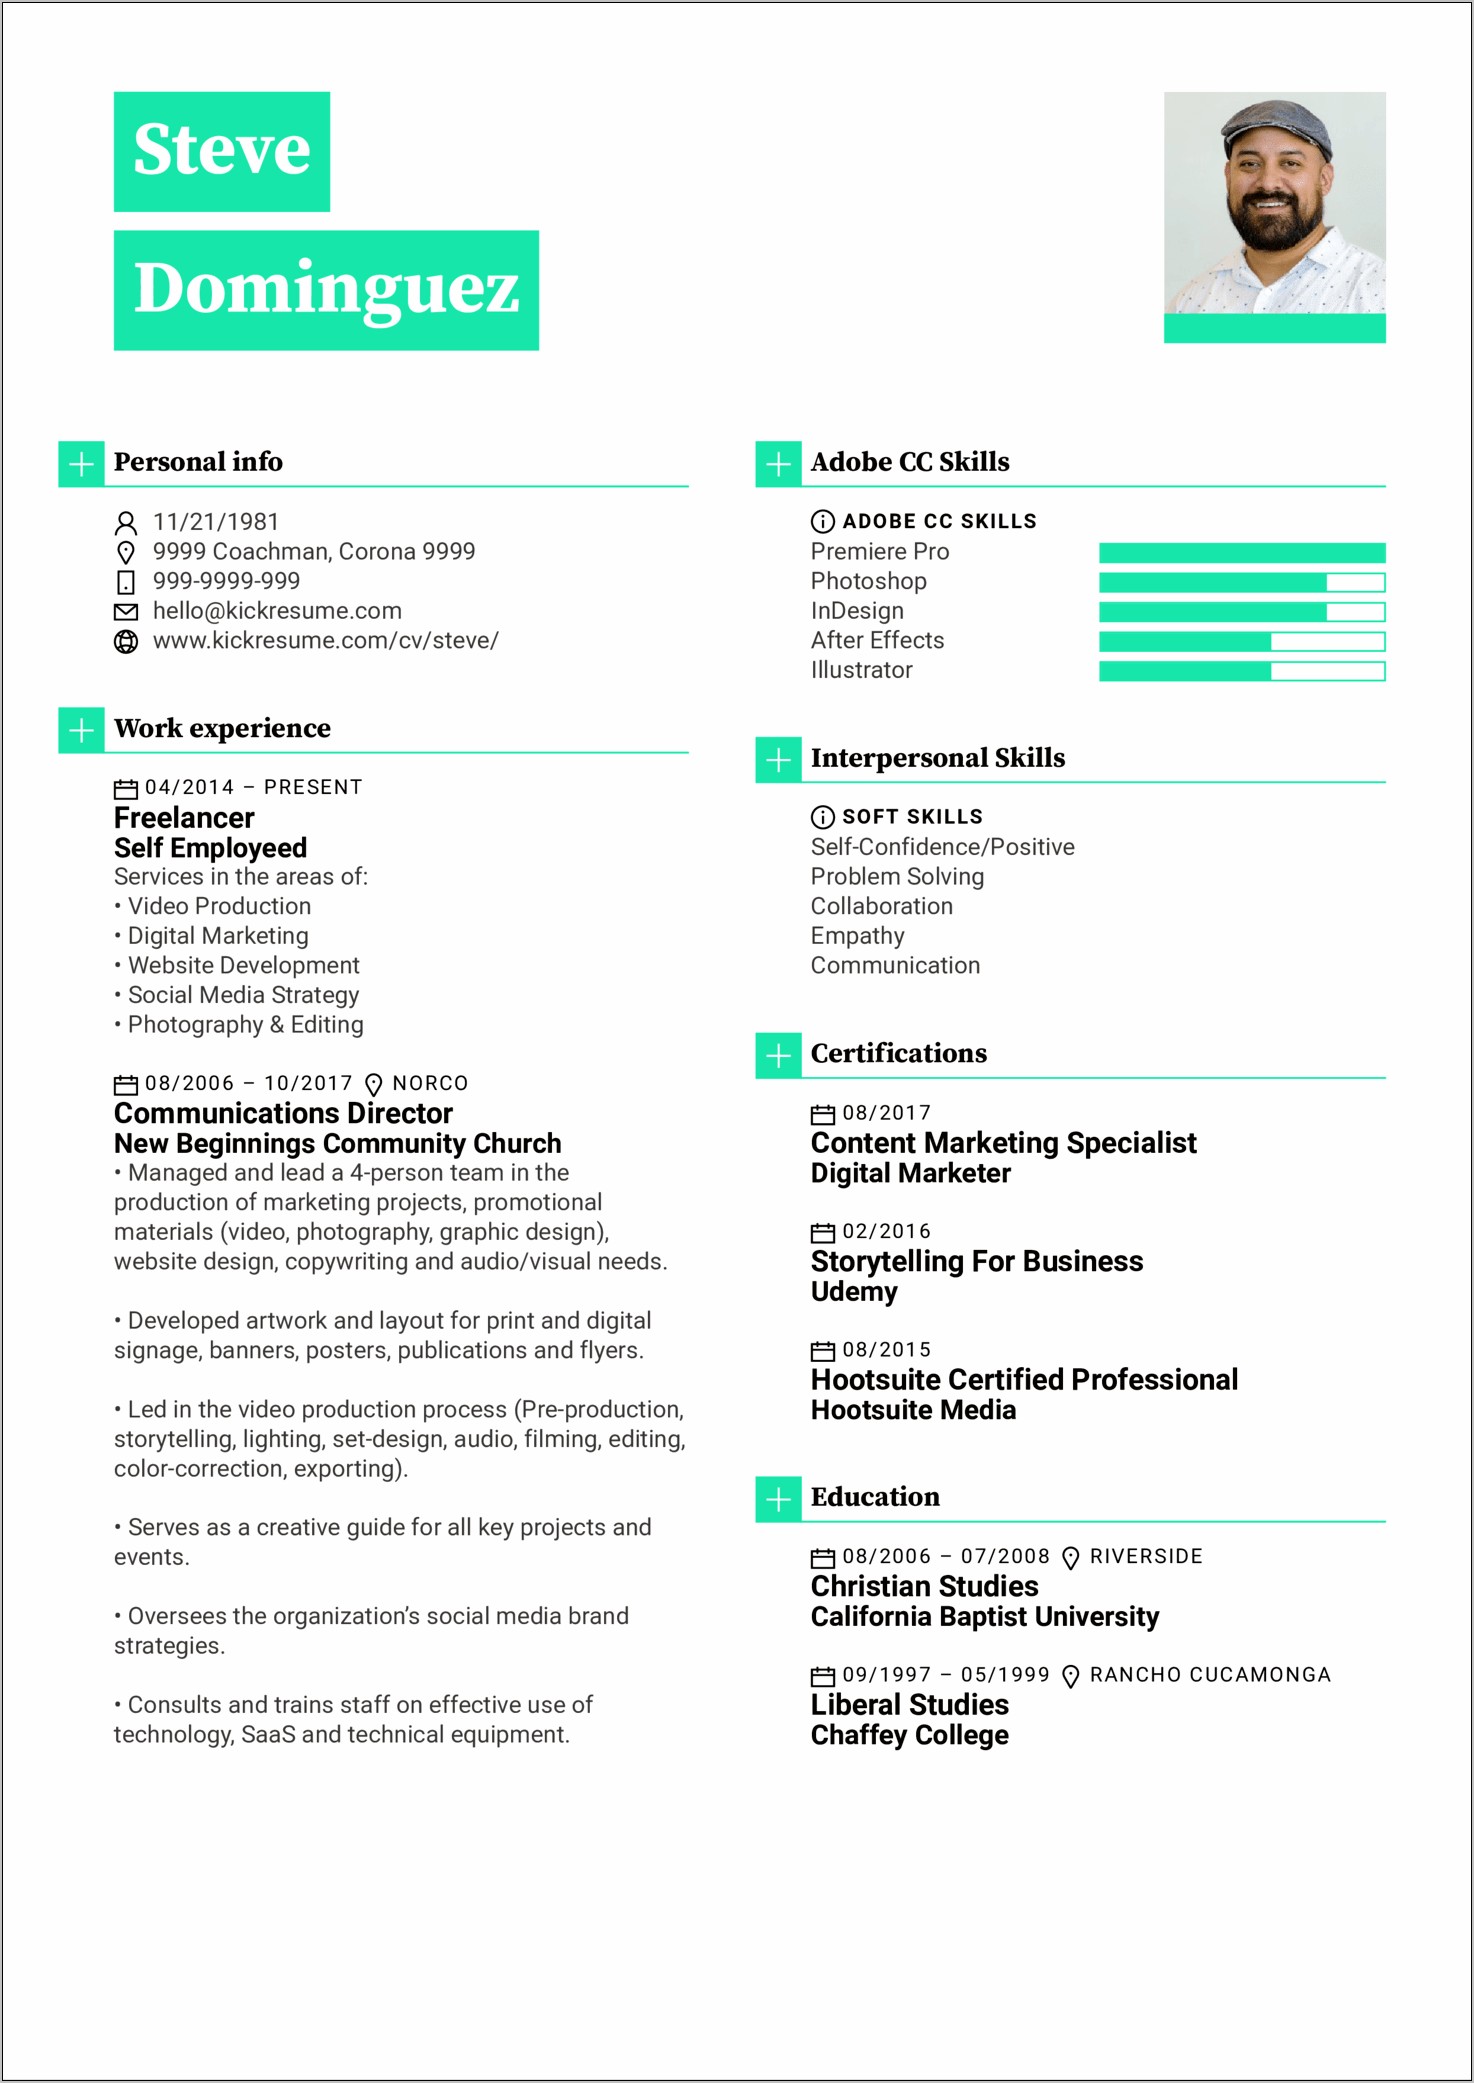 Graphic Design Skills To List On Resume